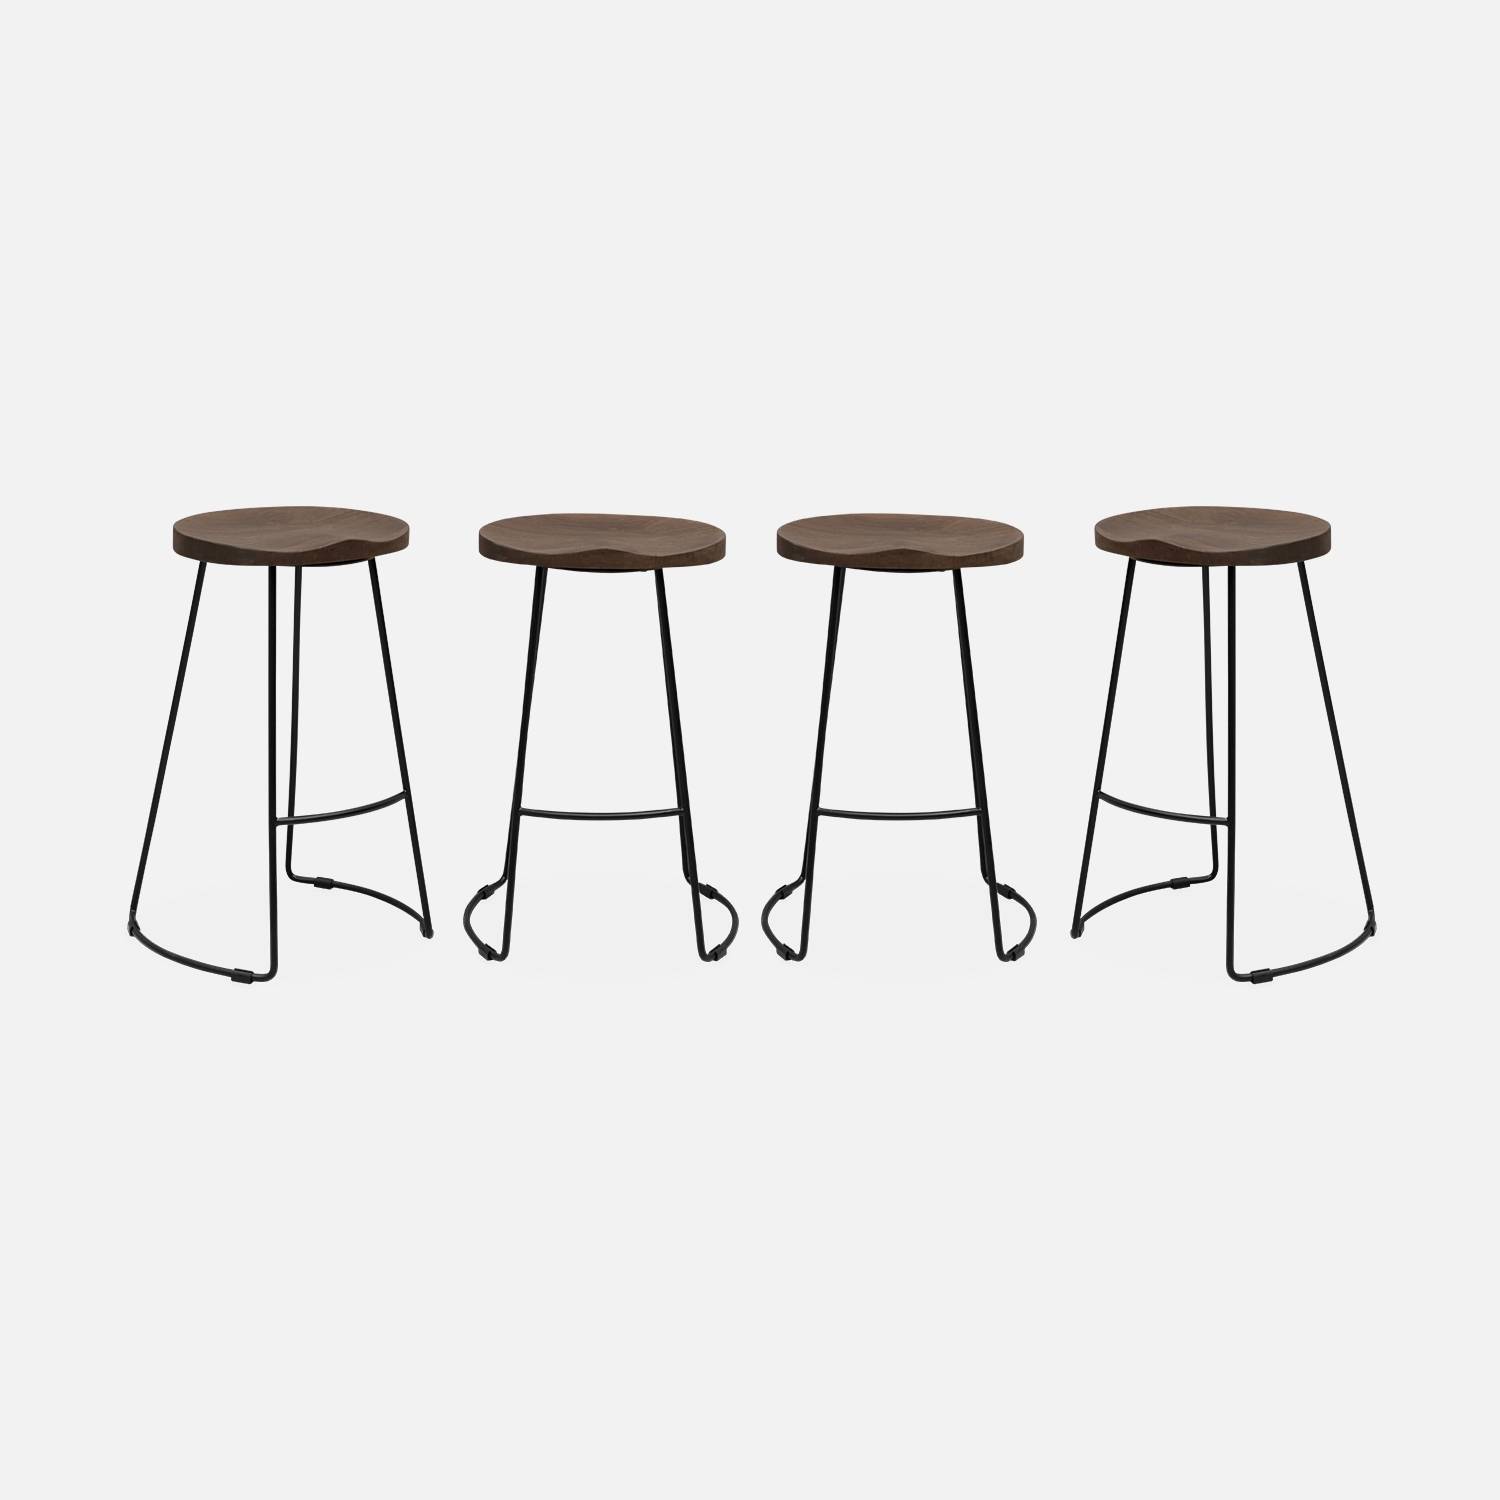 Set of 4 industrial metal and wooden bar stools, 44x36x65cm, Light Walnut | sweeek